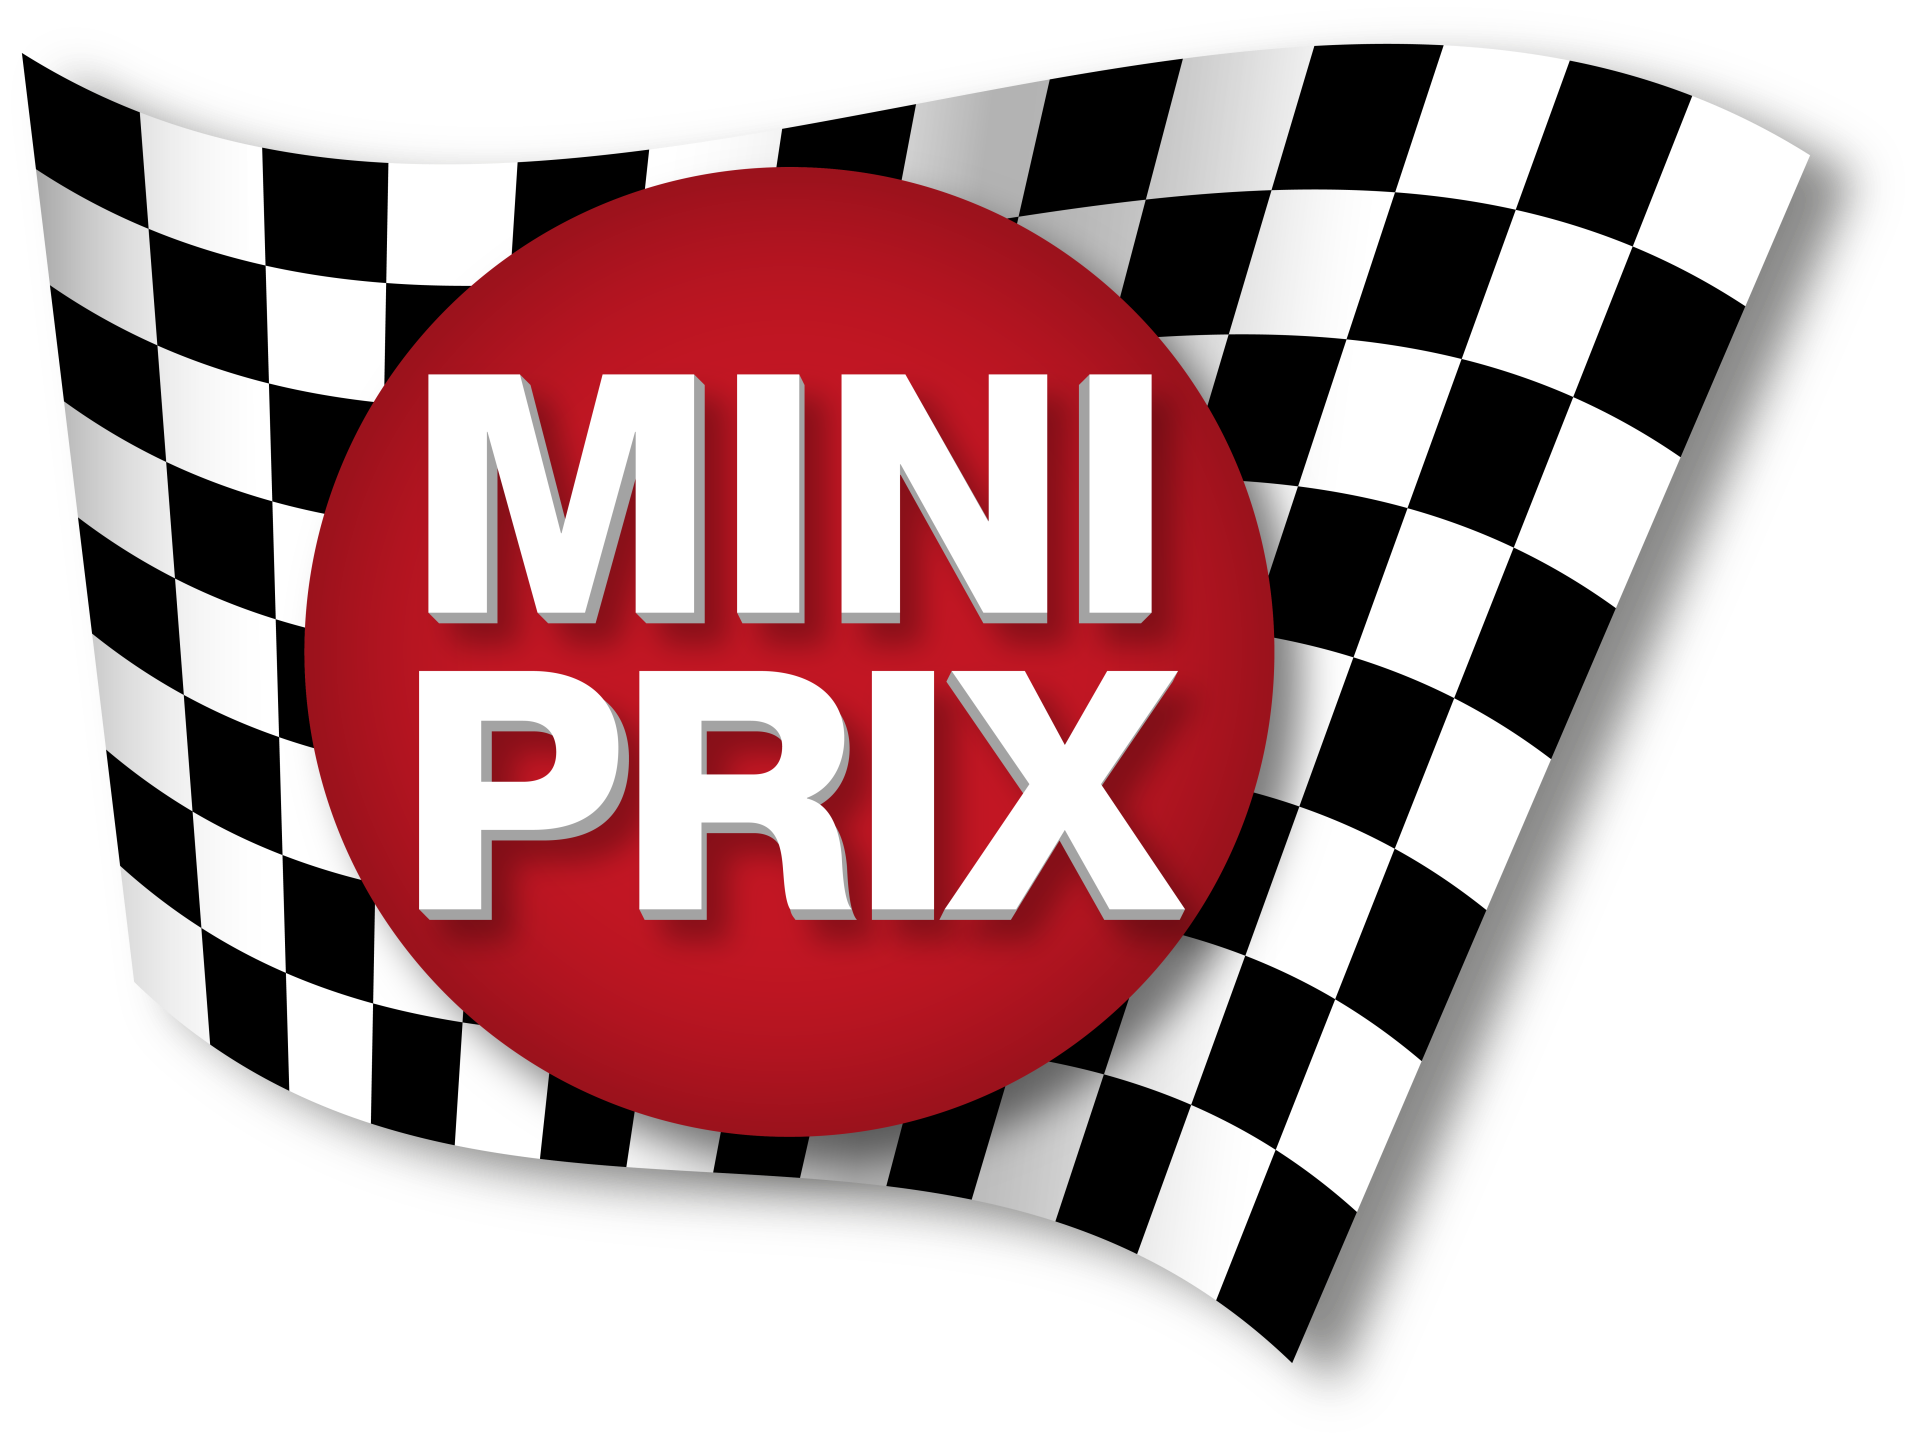 Logo Miniprix